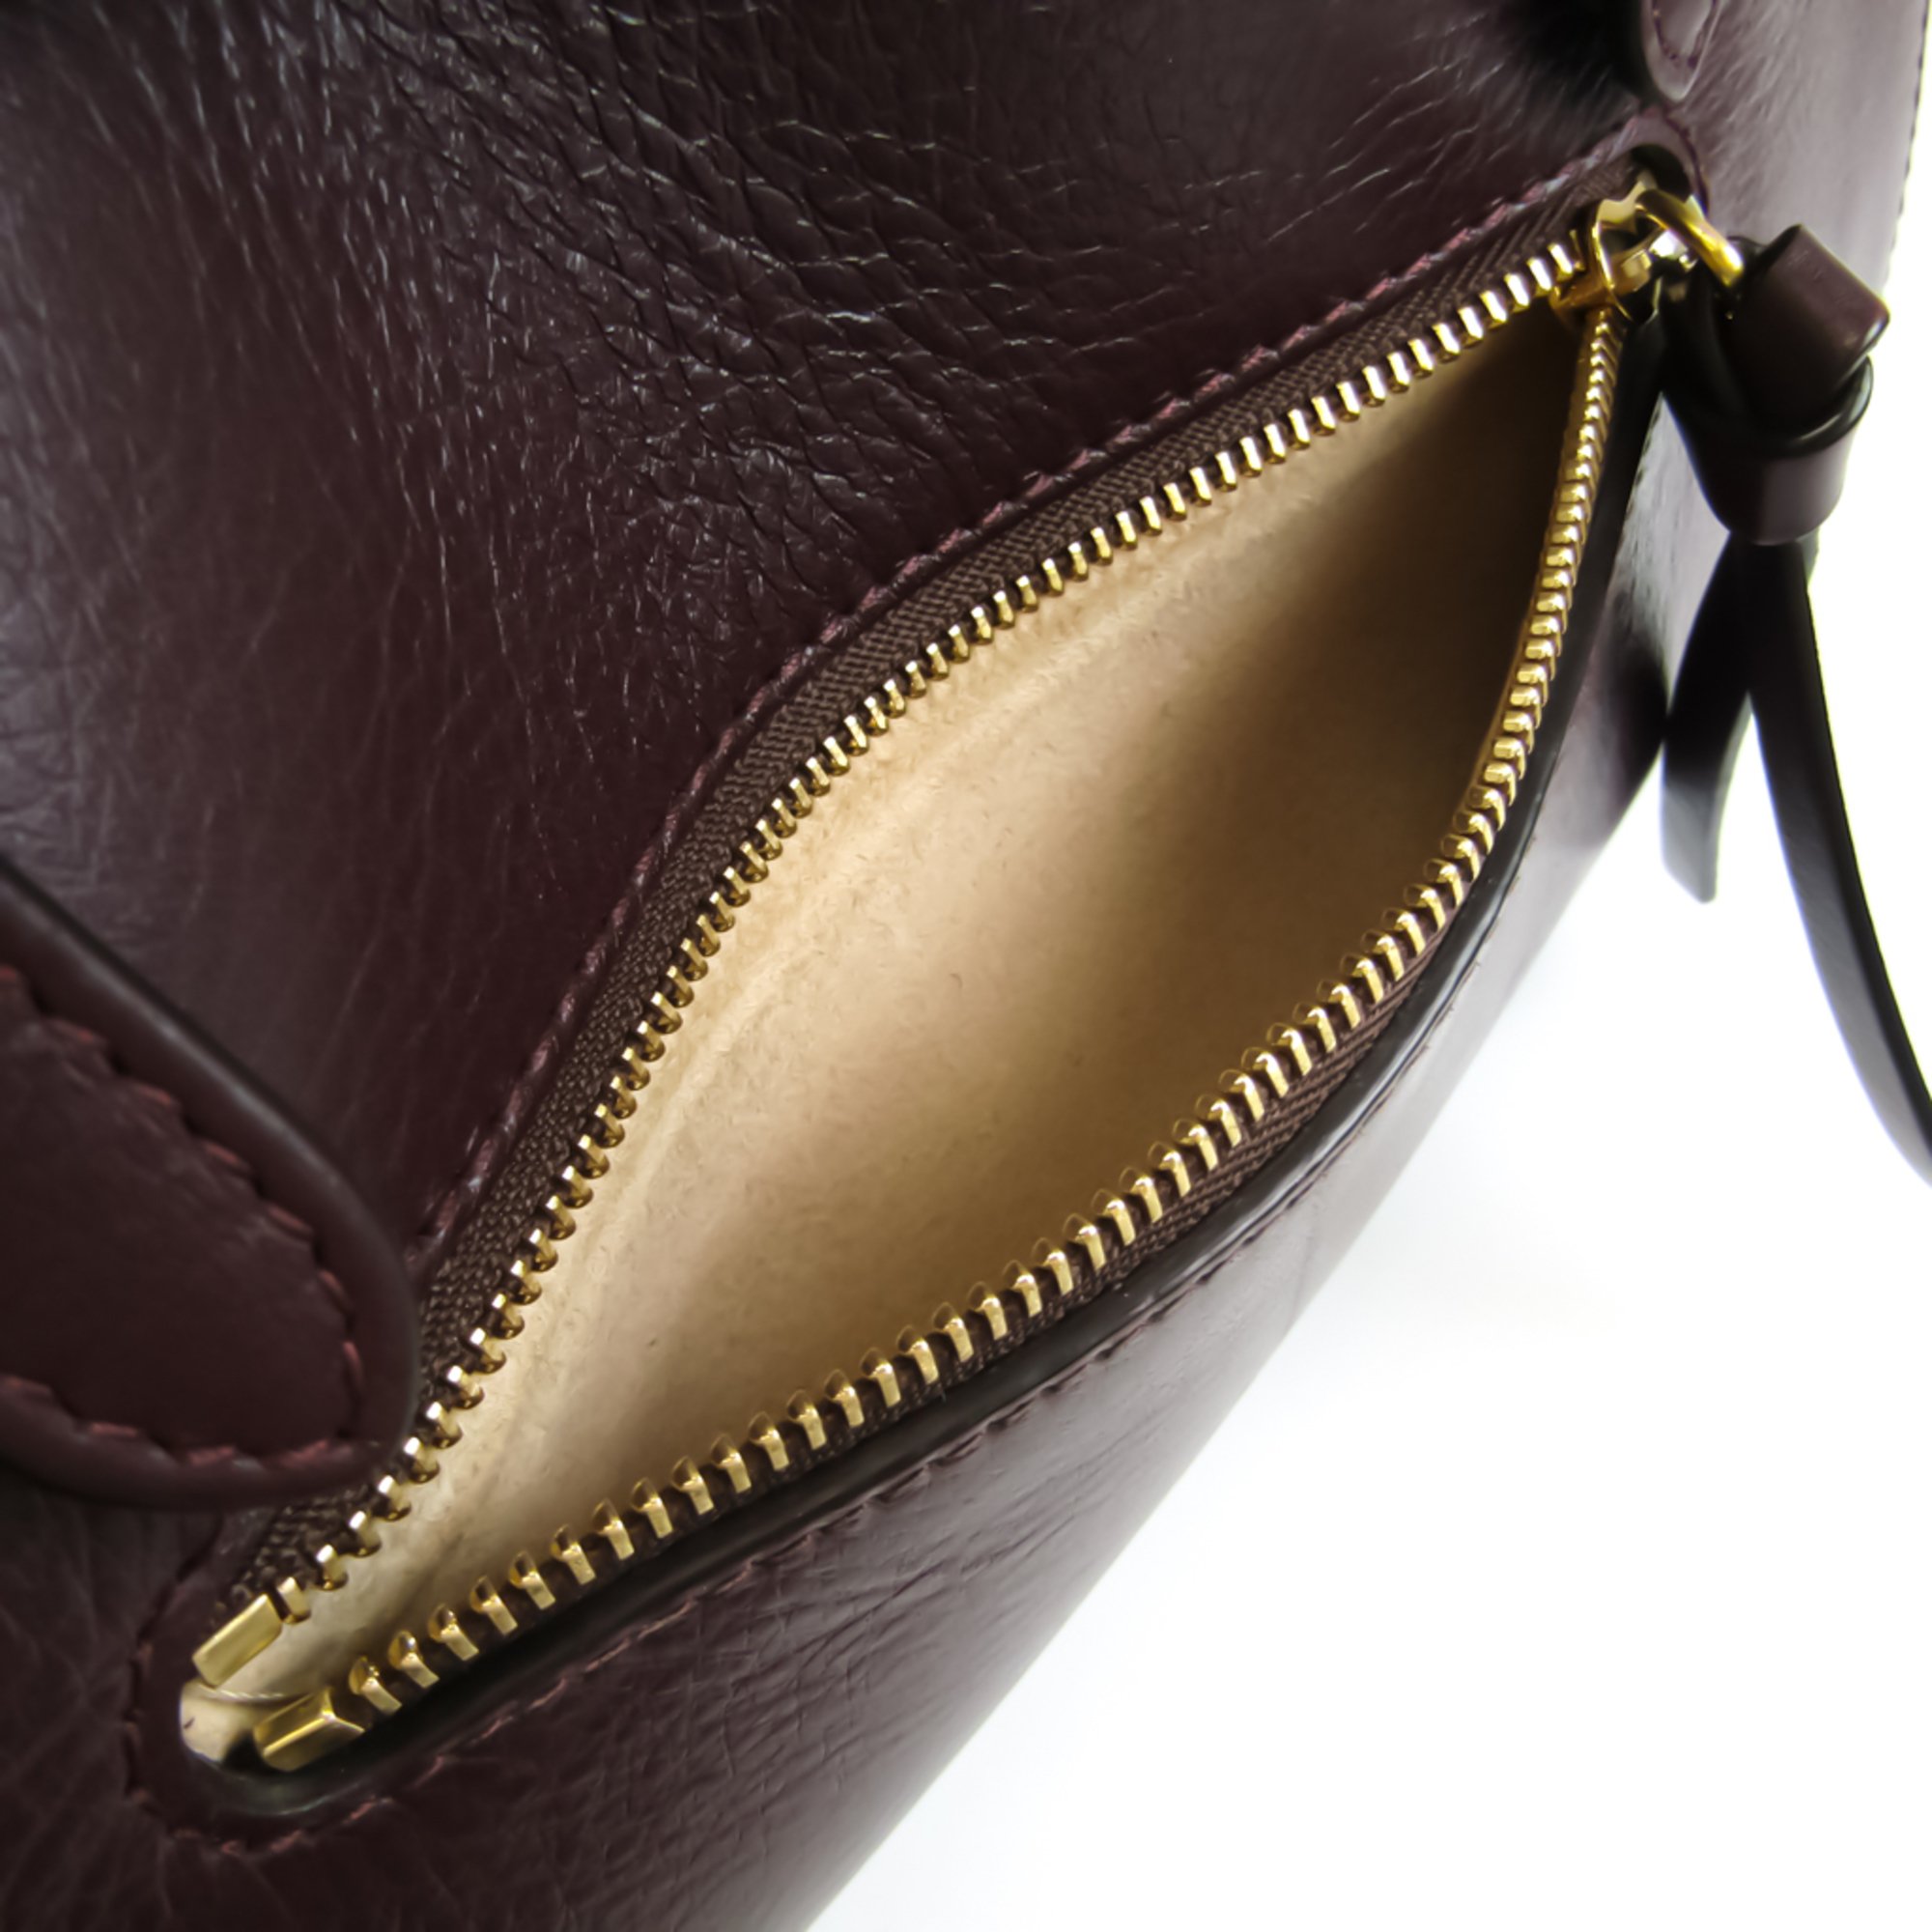 J&M Davidson Women's Leather Handbag Purple Brown